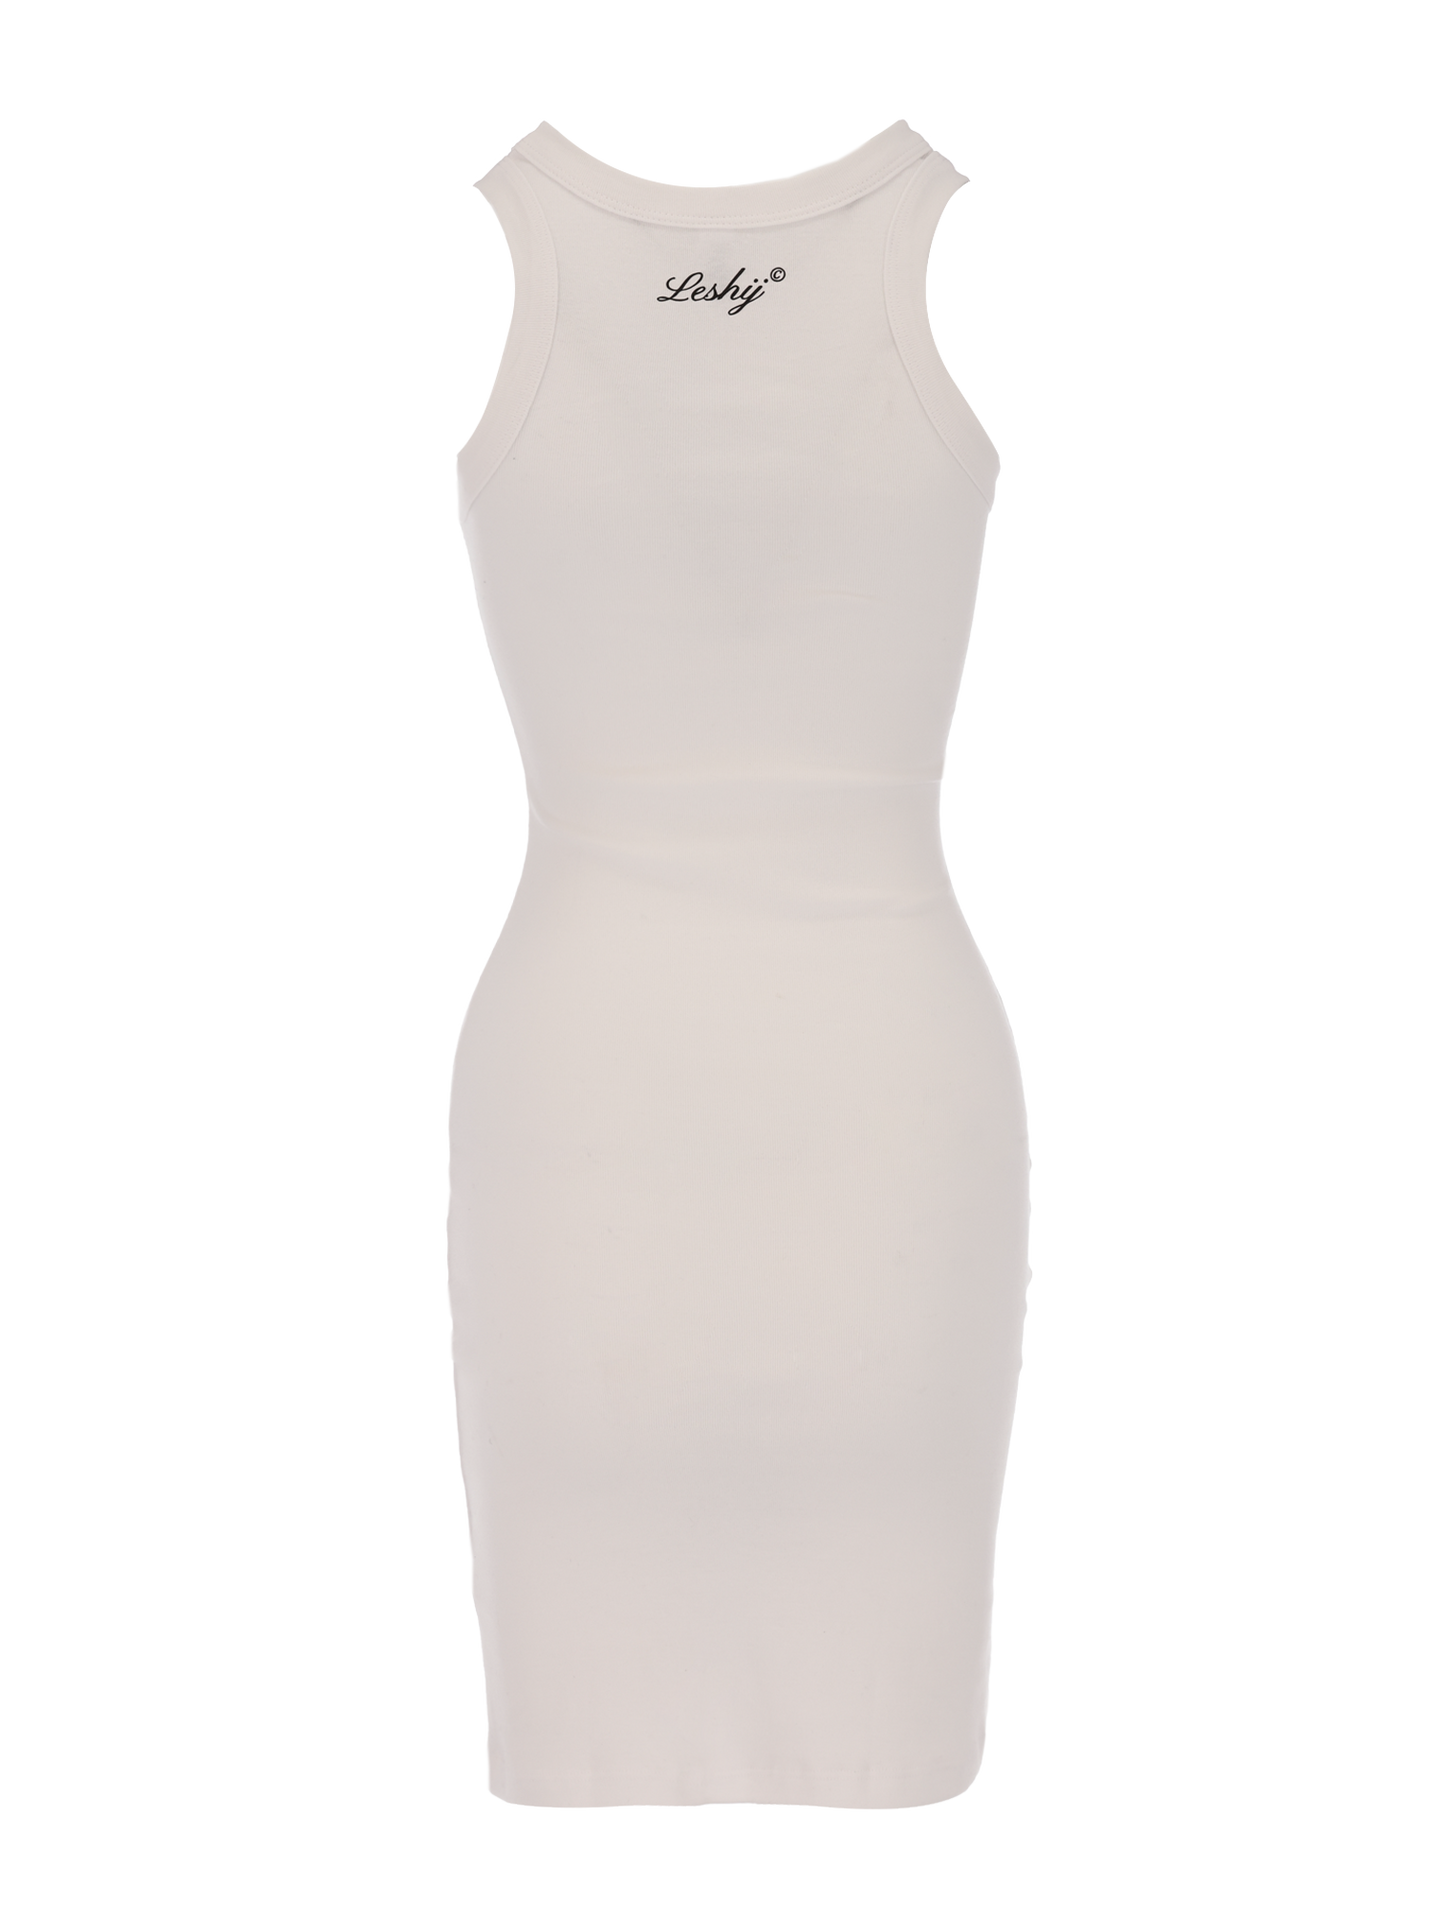 Acrostic Dress (White)